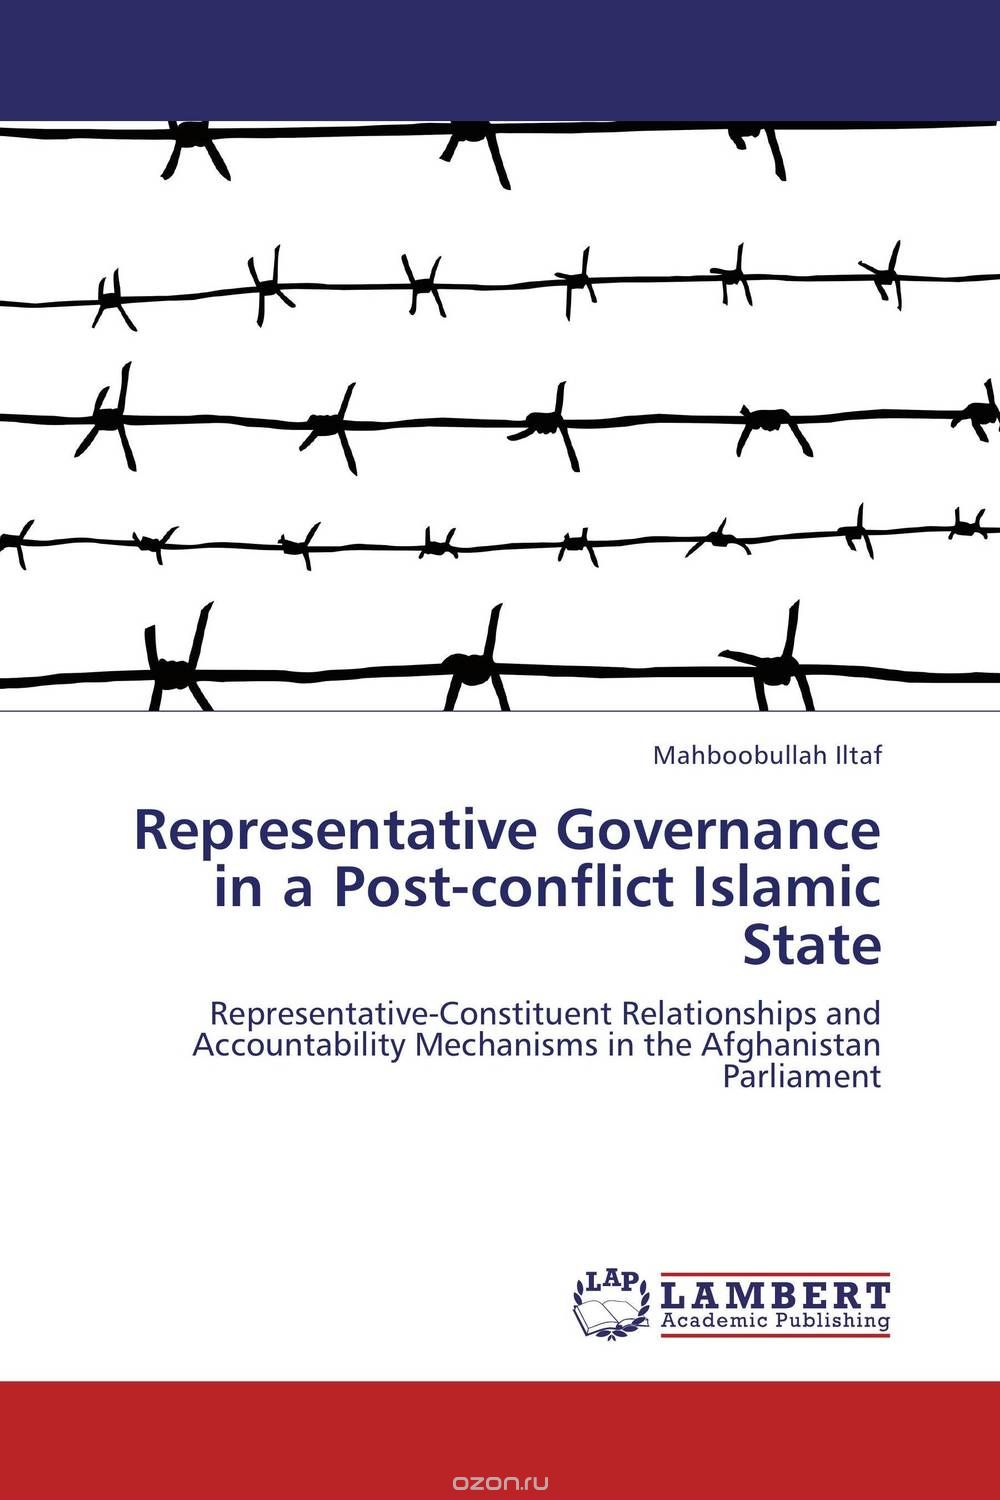 Скачать книгу "Representative Governance in a Post-conflict Islamic State"